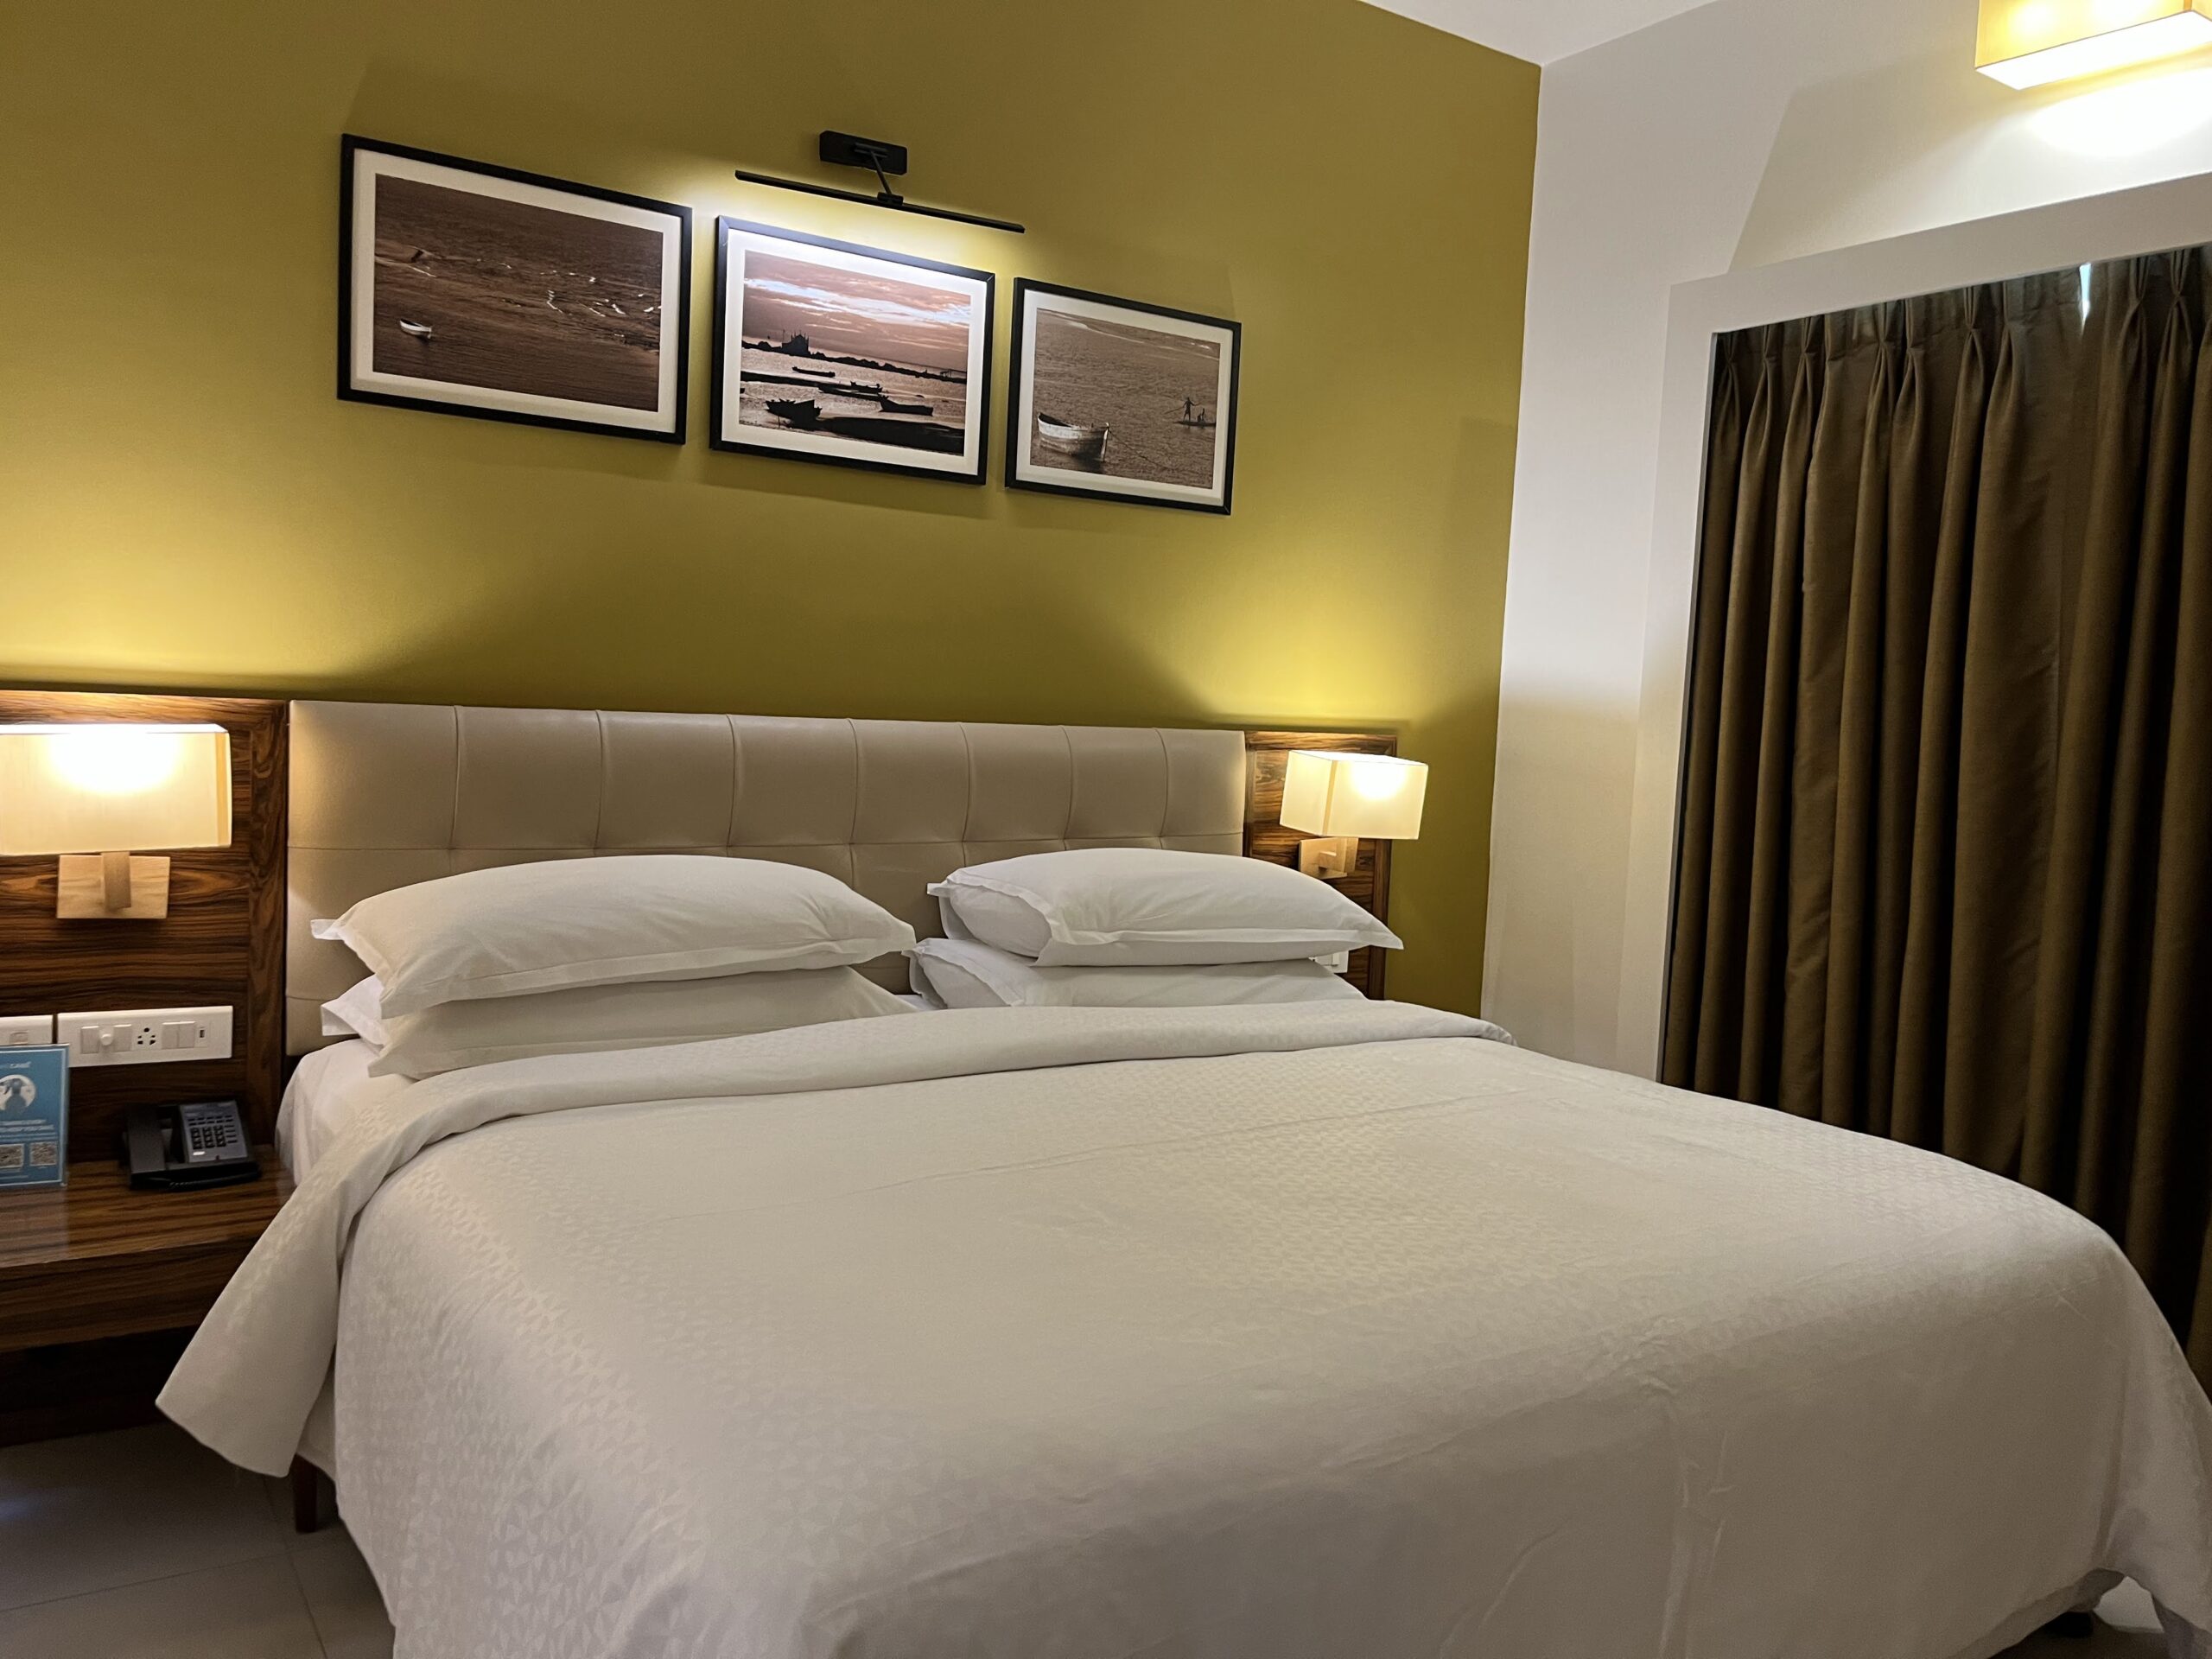 ROOMS AT THE BEST HOTEL IN MAHABALIPURAM
